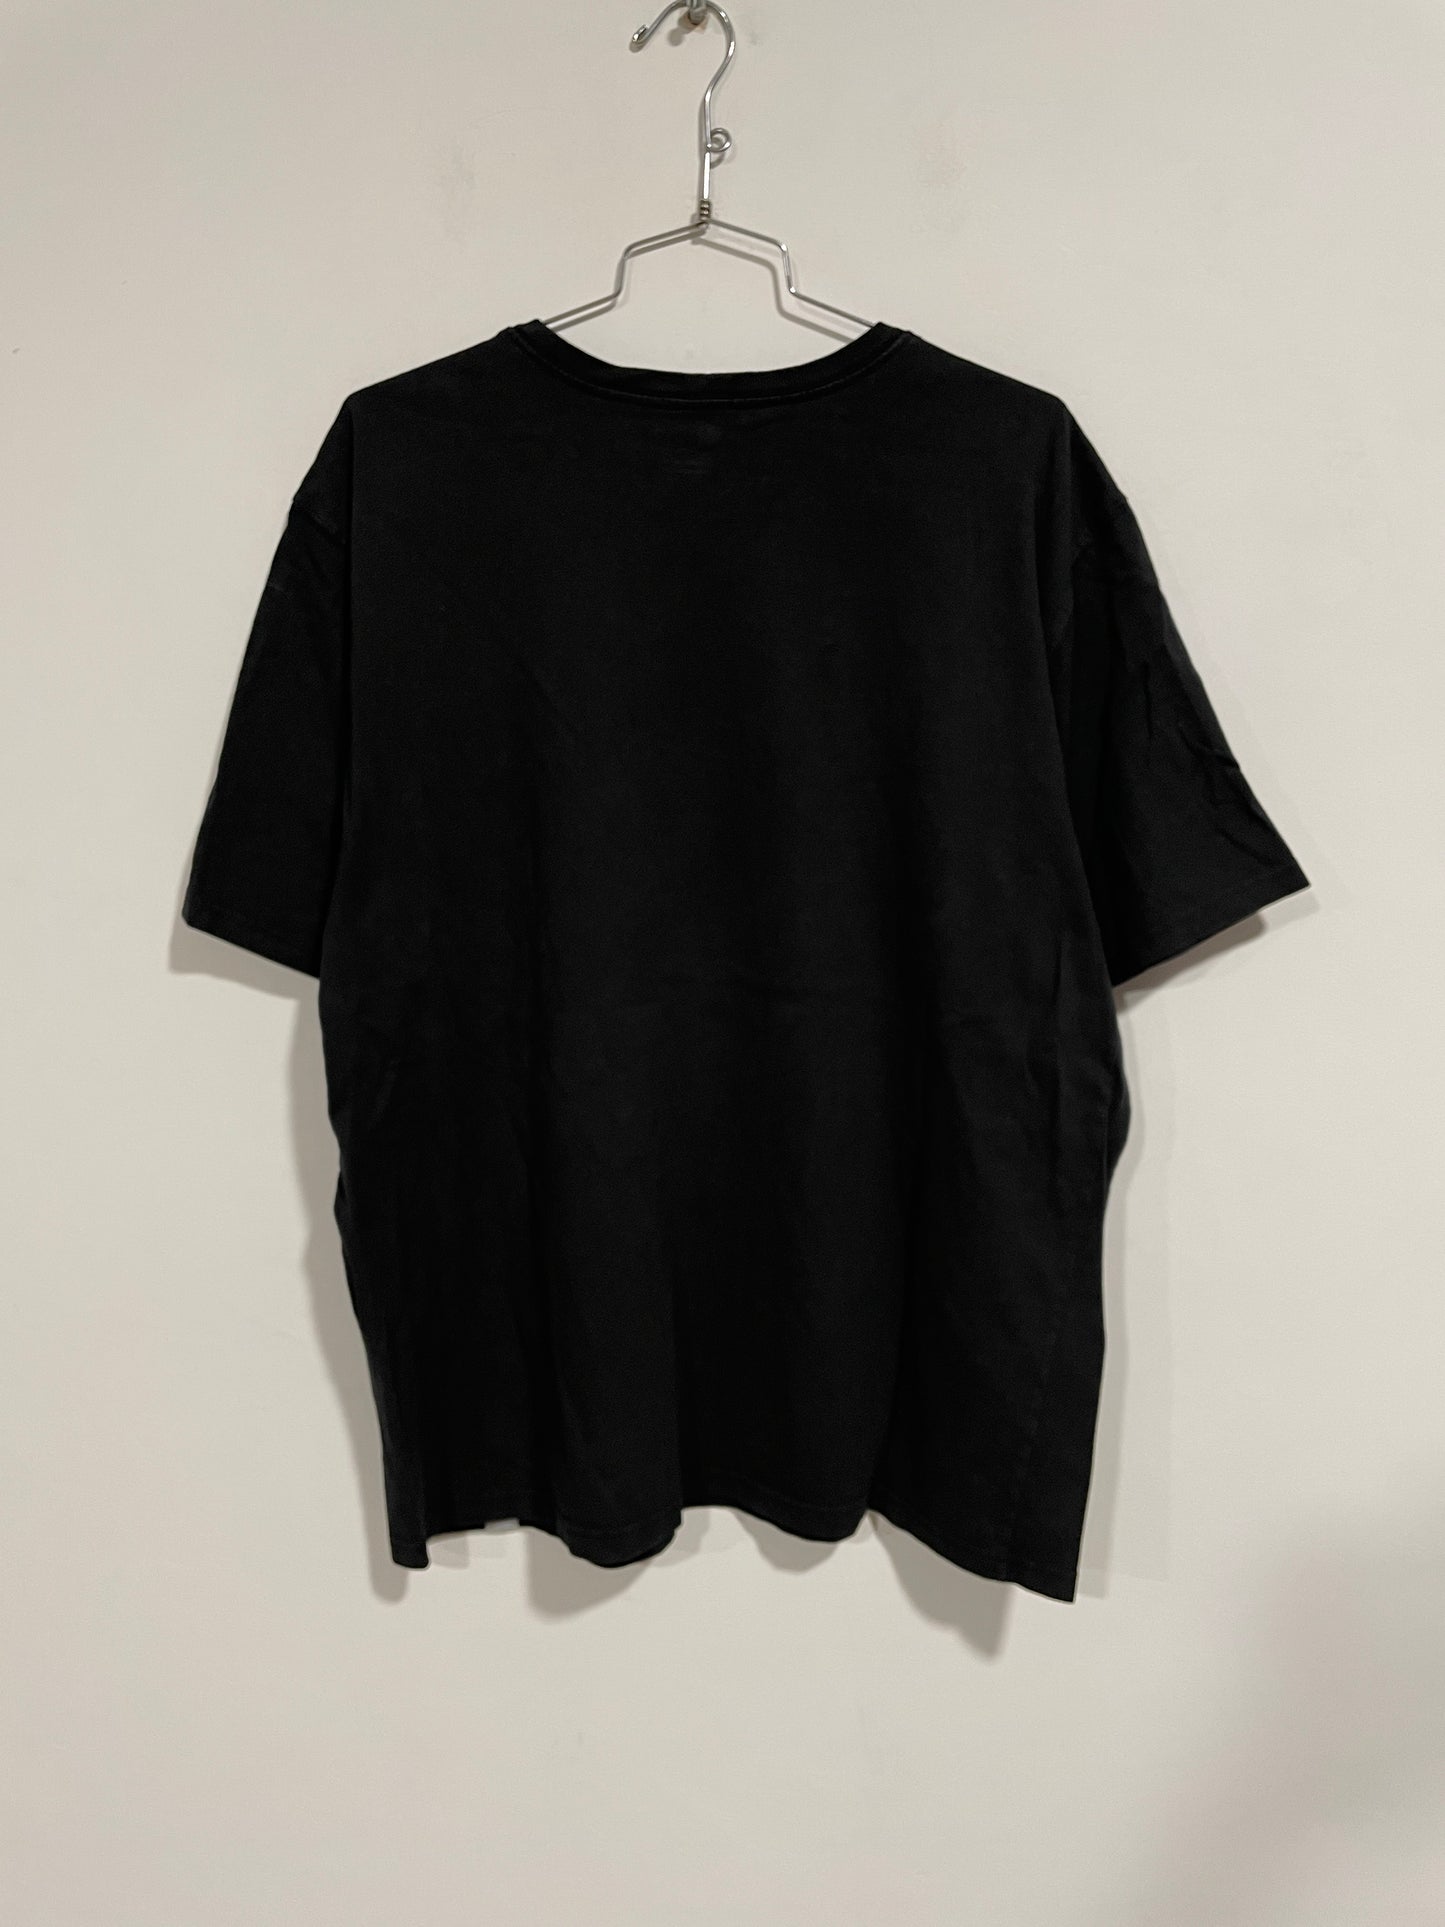 T shirt Carhartt workwear (C420)